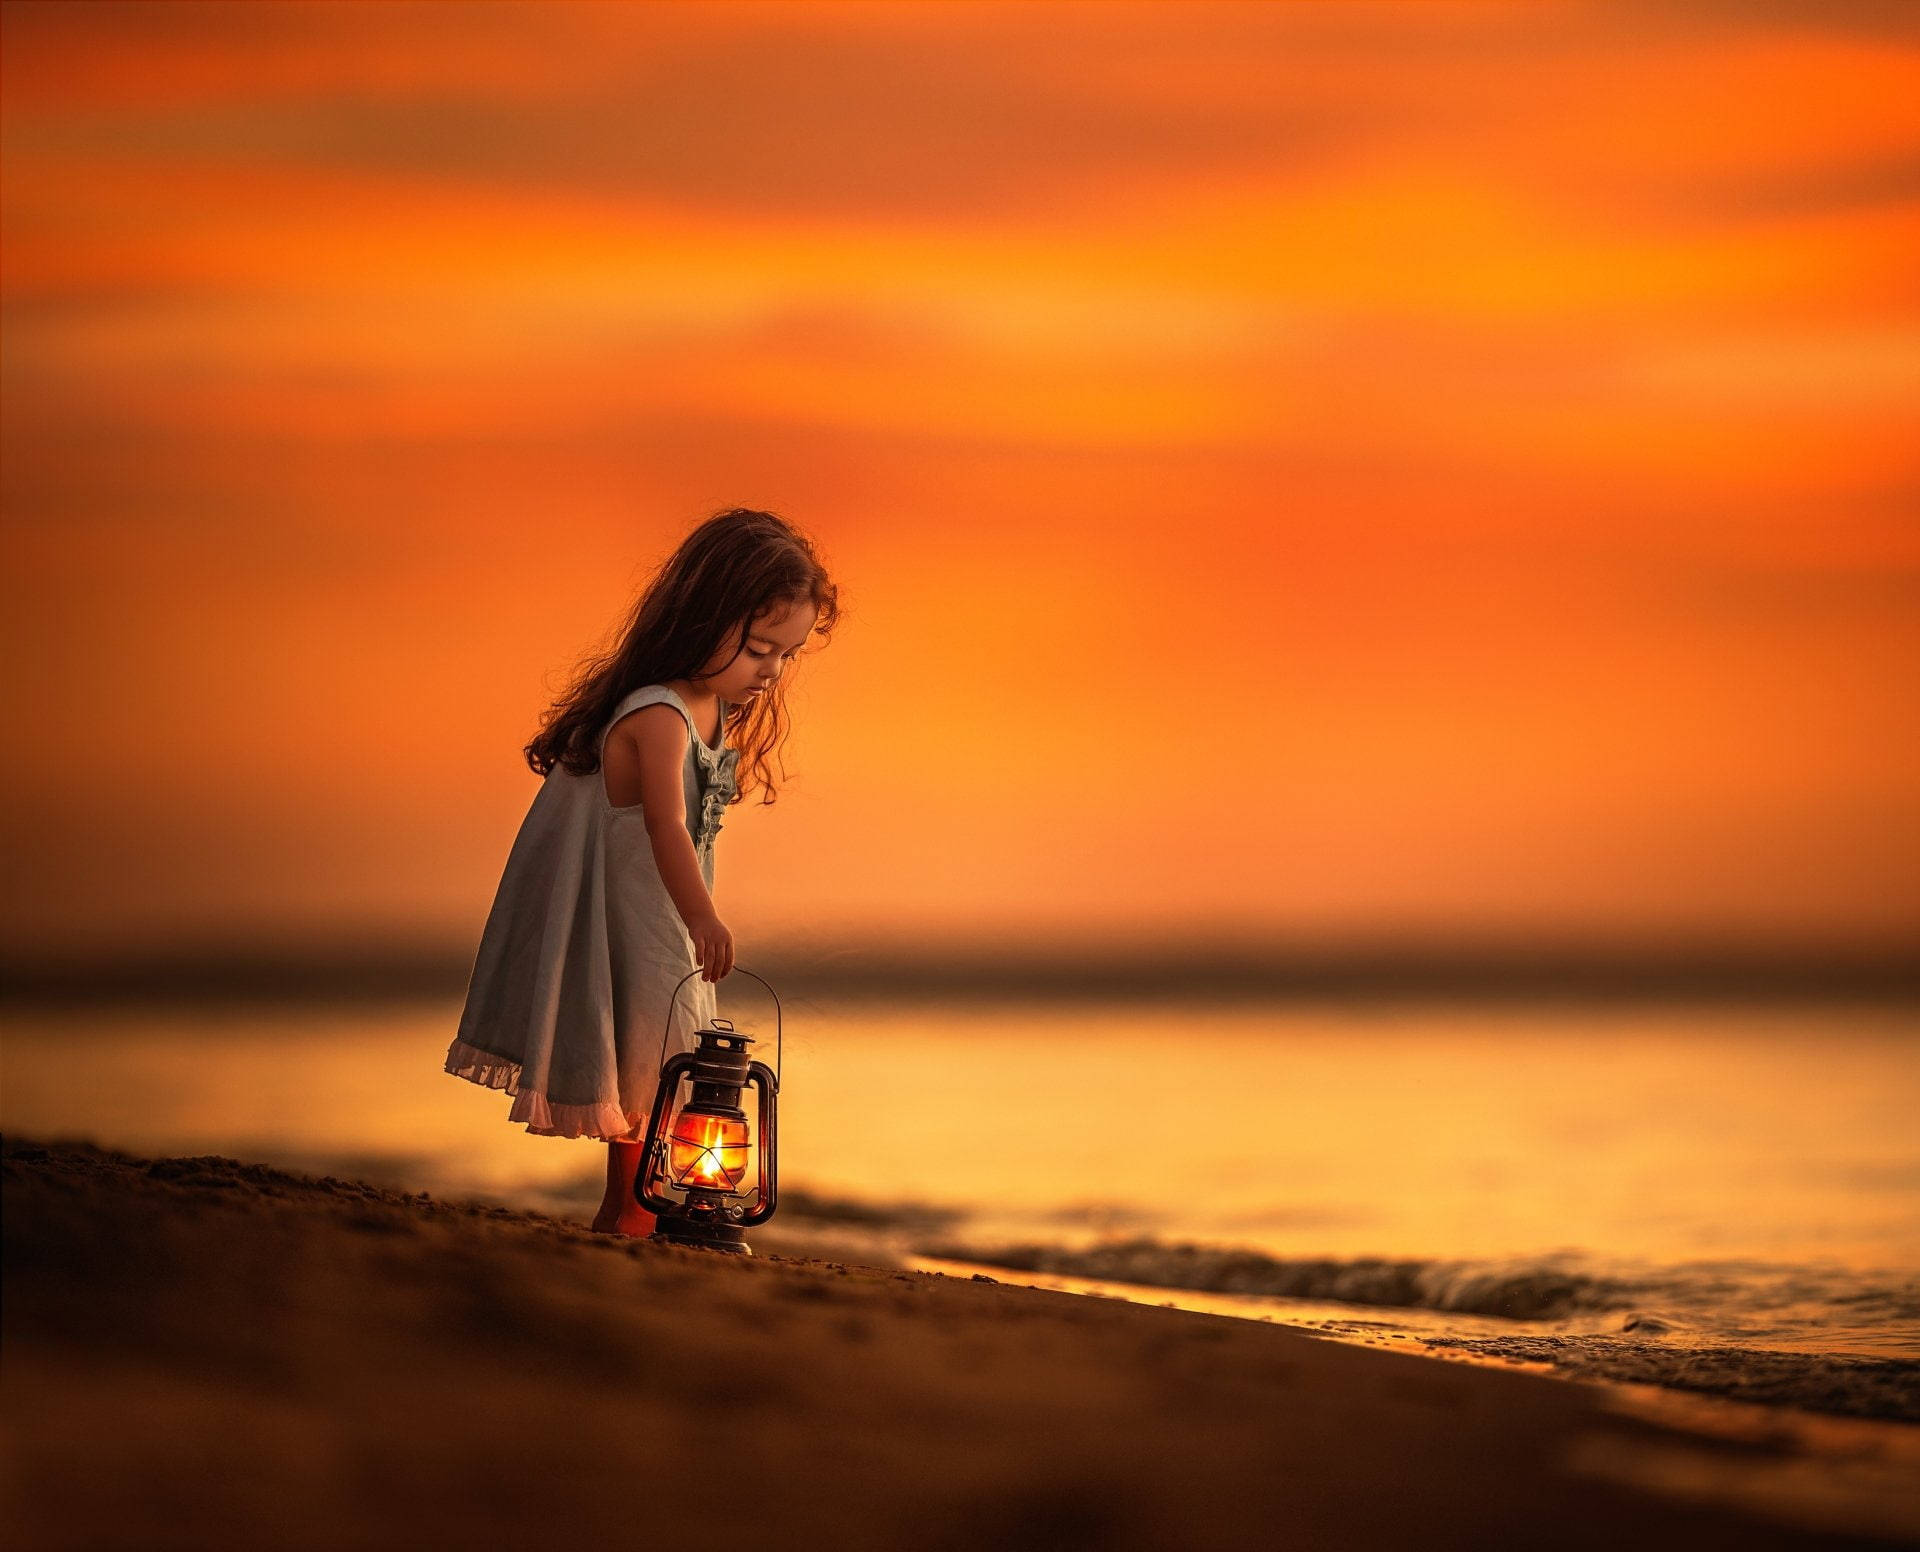 Sunset Beach Girl With Lamp Wallpaper